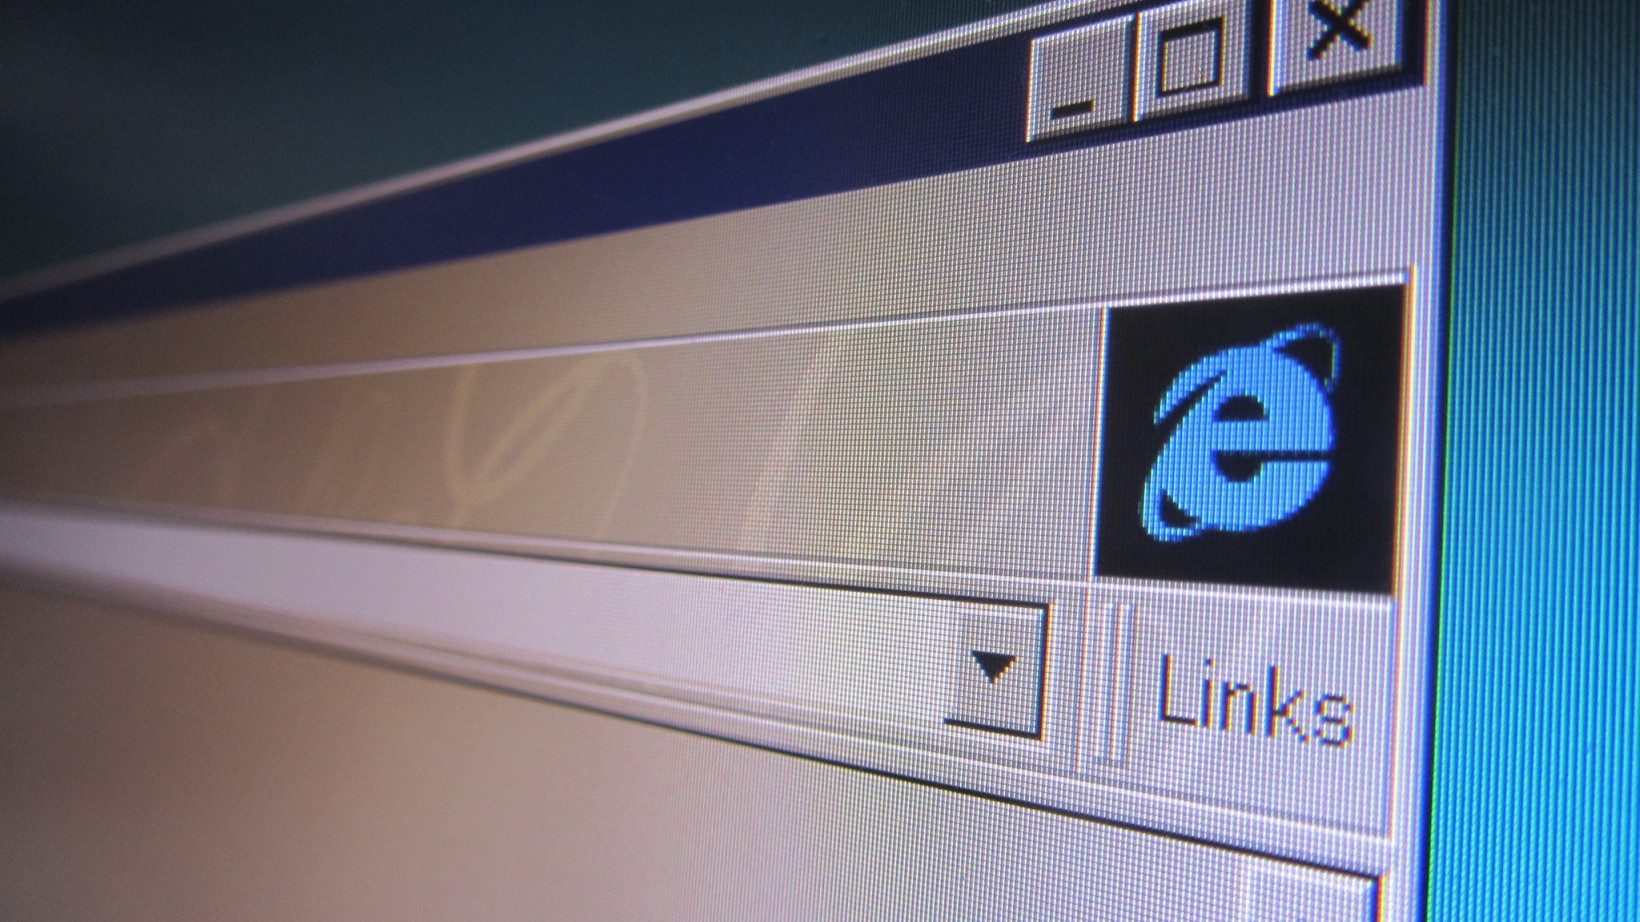 Adios, Internet Explorer – You Won’t Be Missed